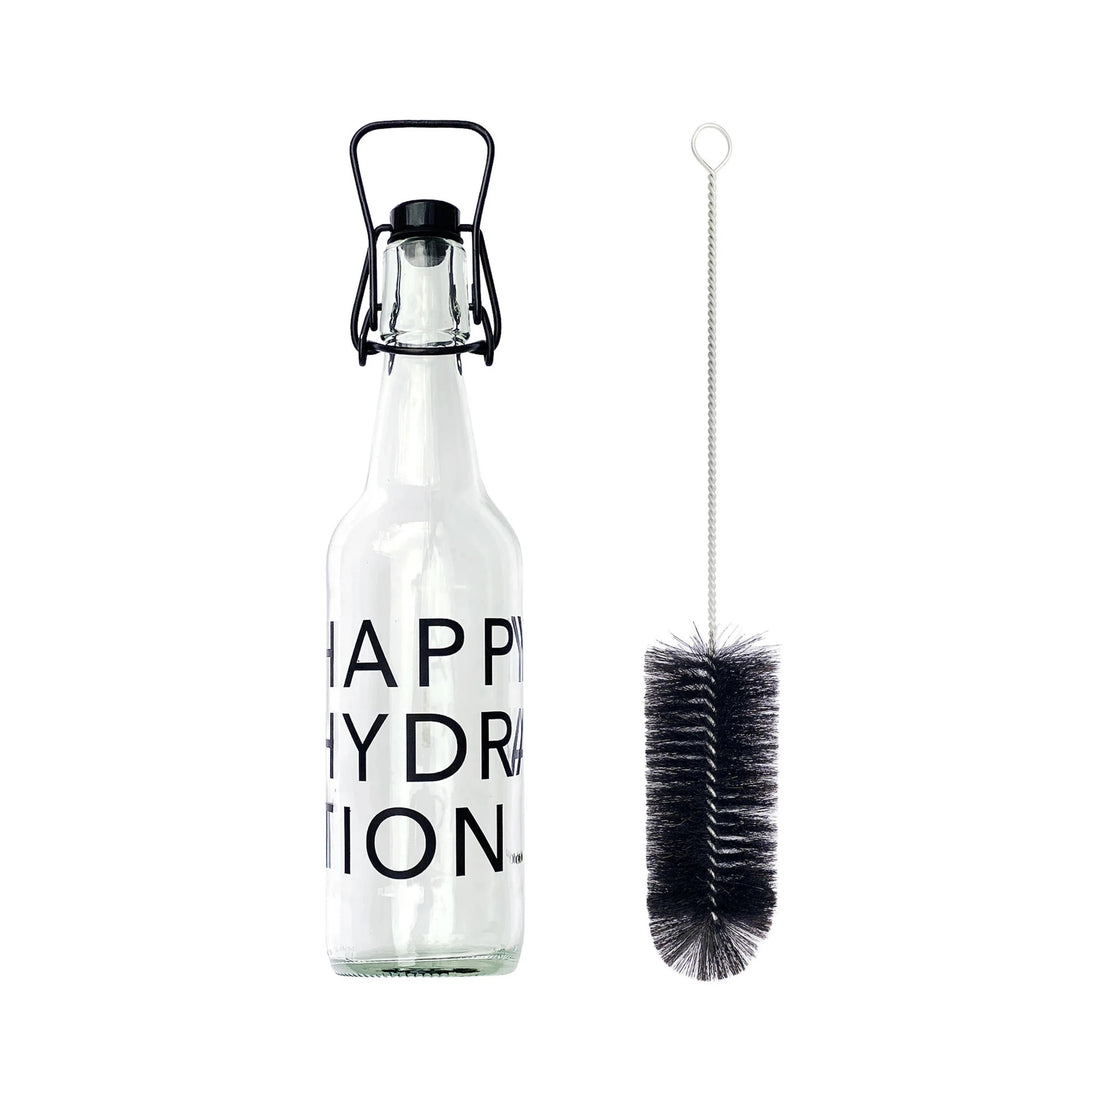 Water bottle and bottle brush